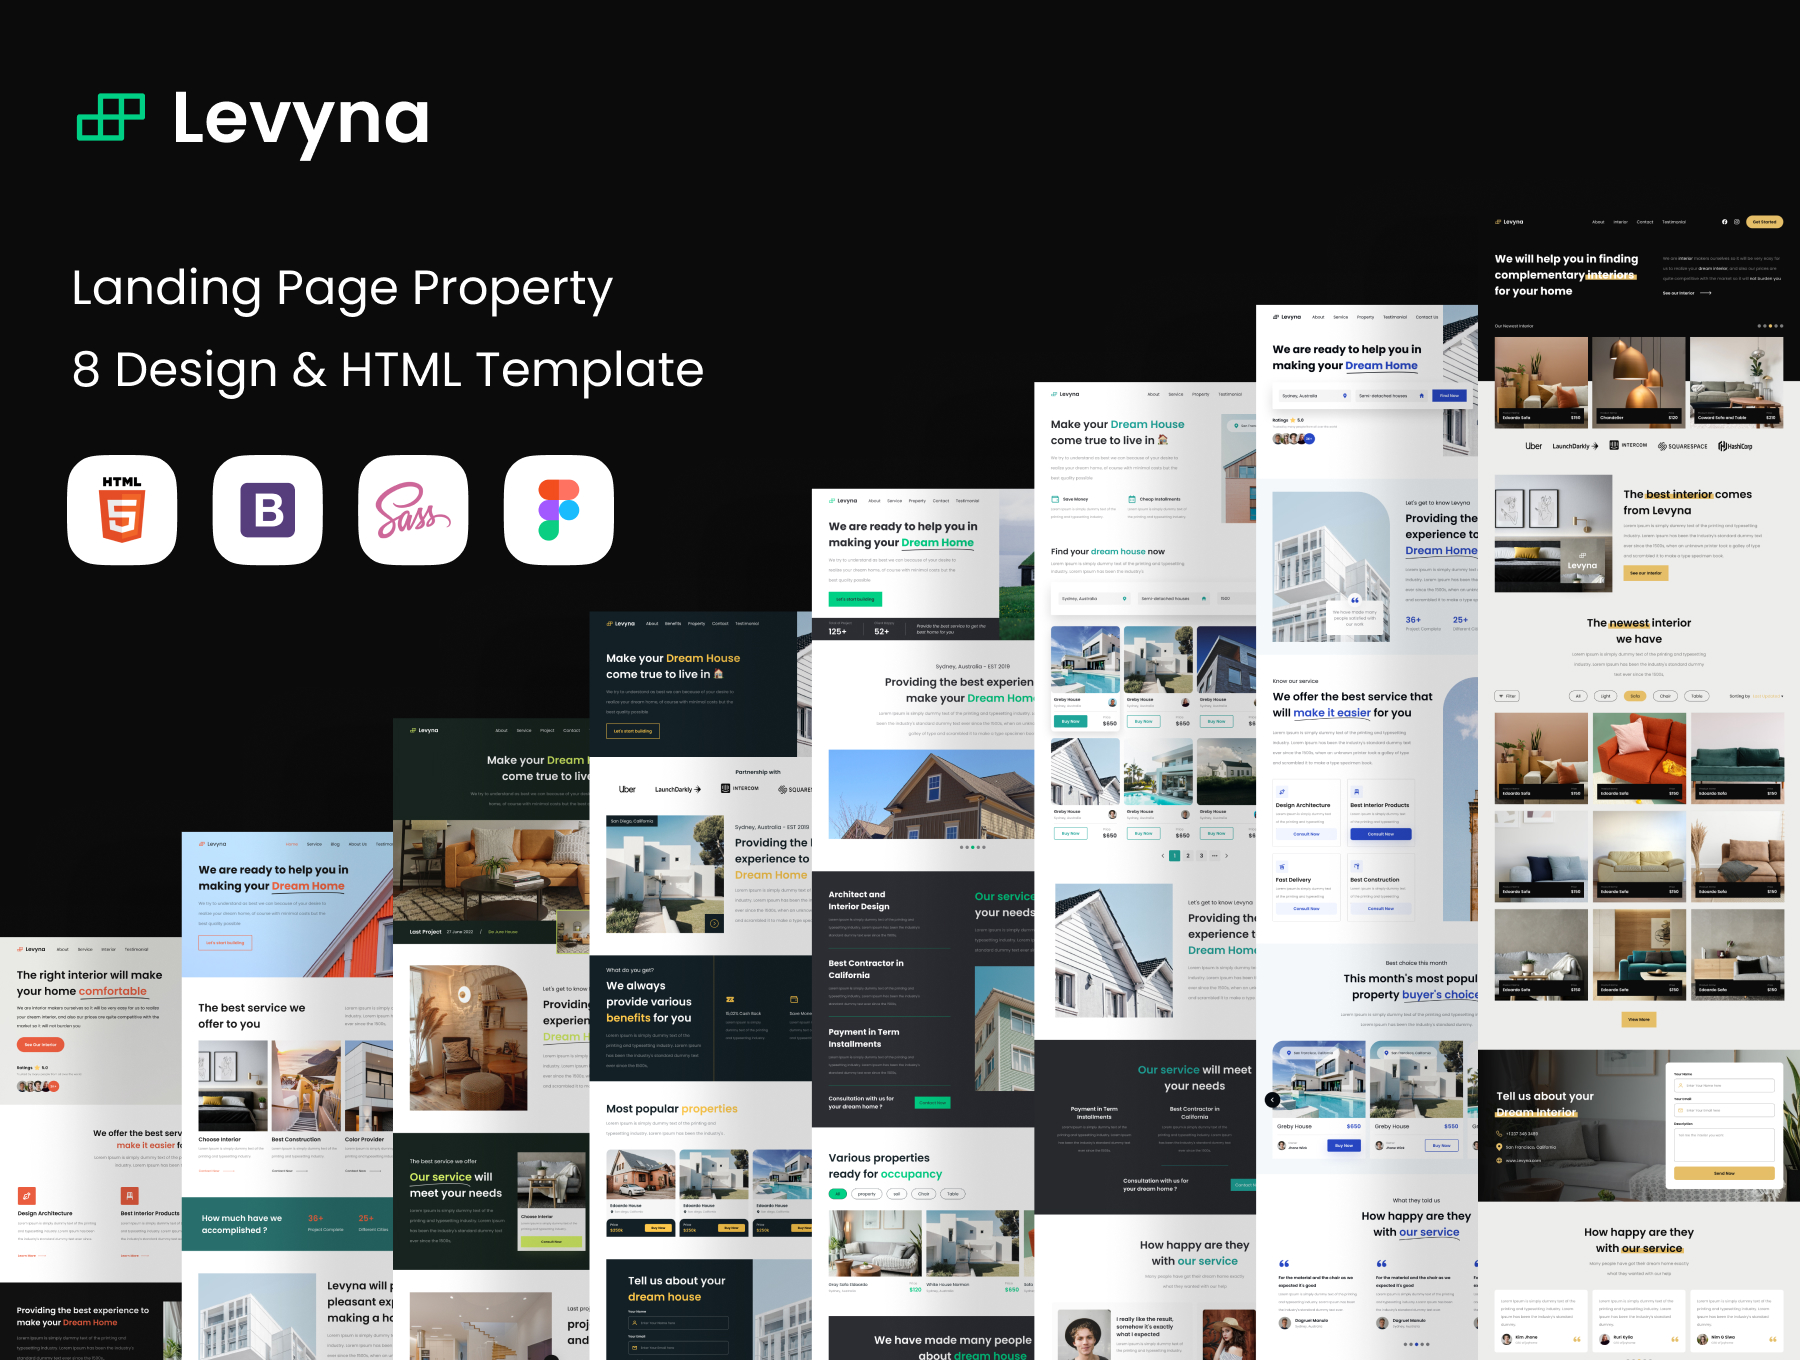 Levyna Batch Landing Page Property - Design & HTML Template